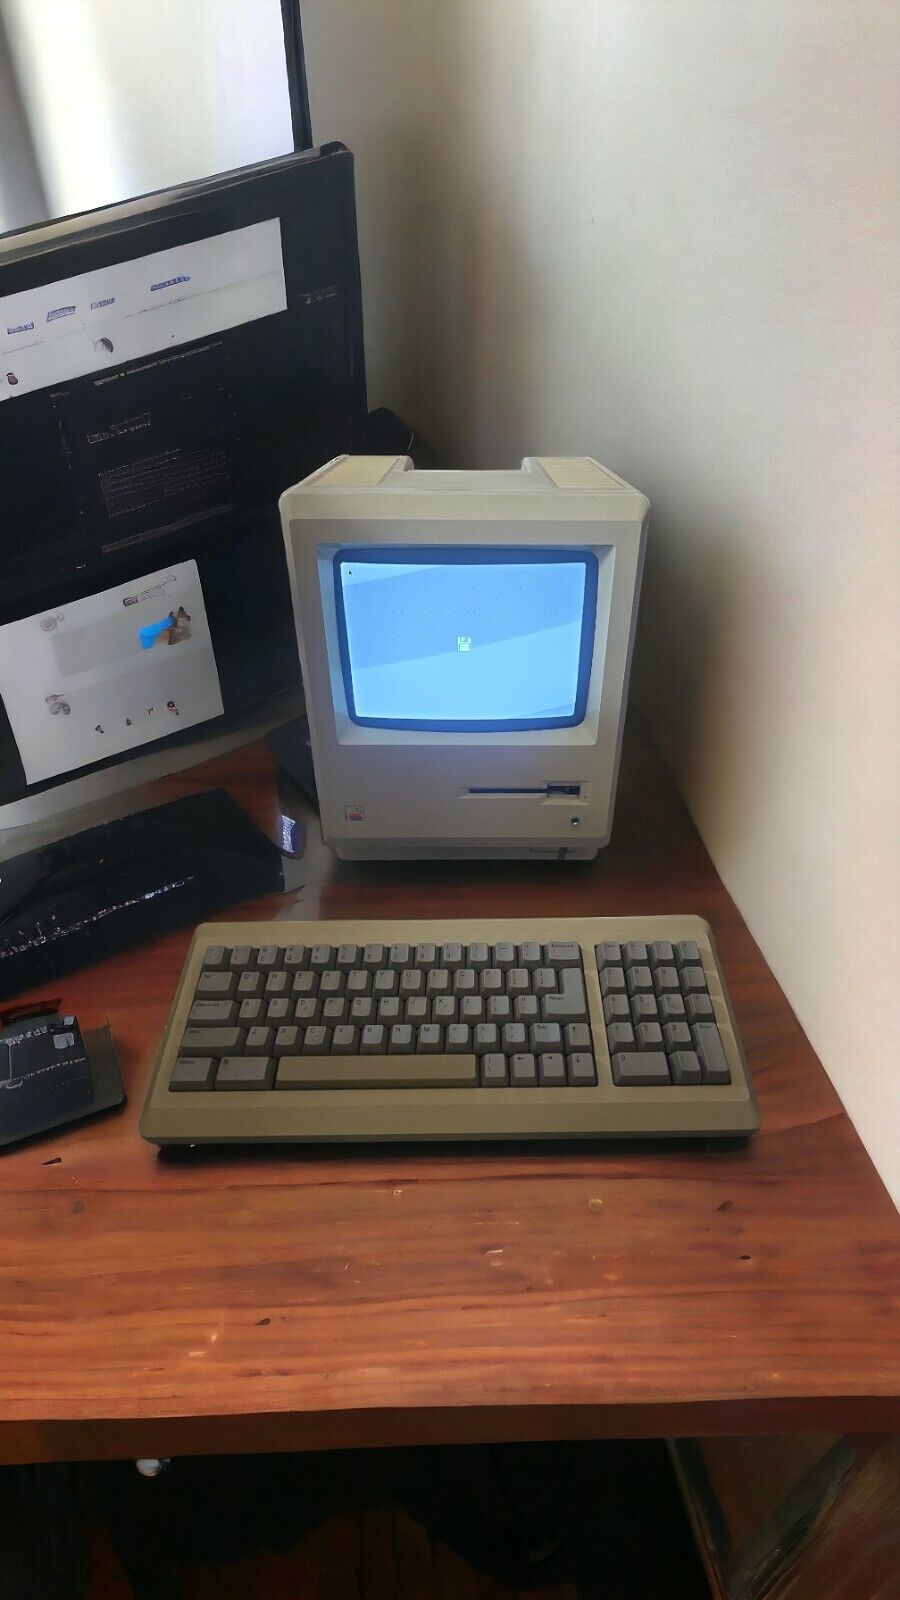 Apple Macintosh Plus 1Mb 60W 120VAC Desktop Computer With Keyboard. No Mouse.